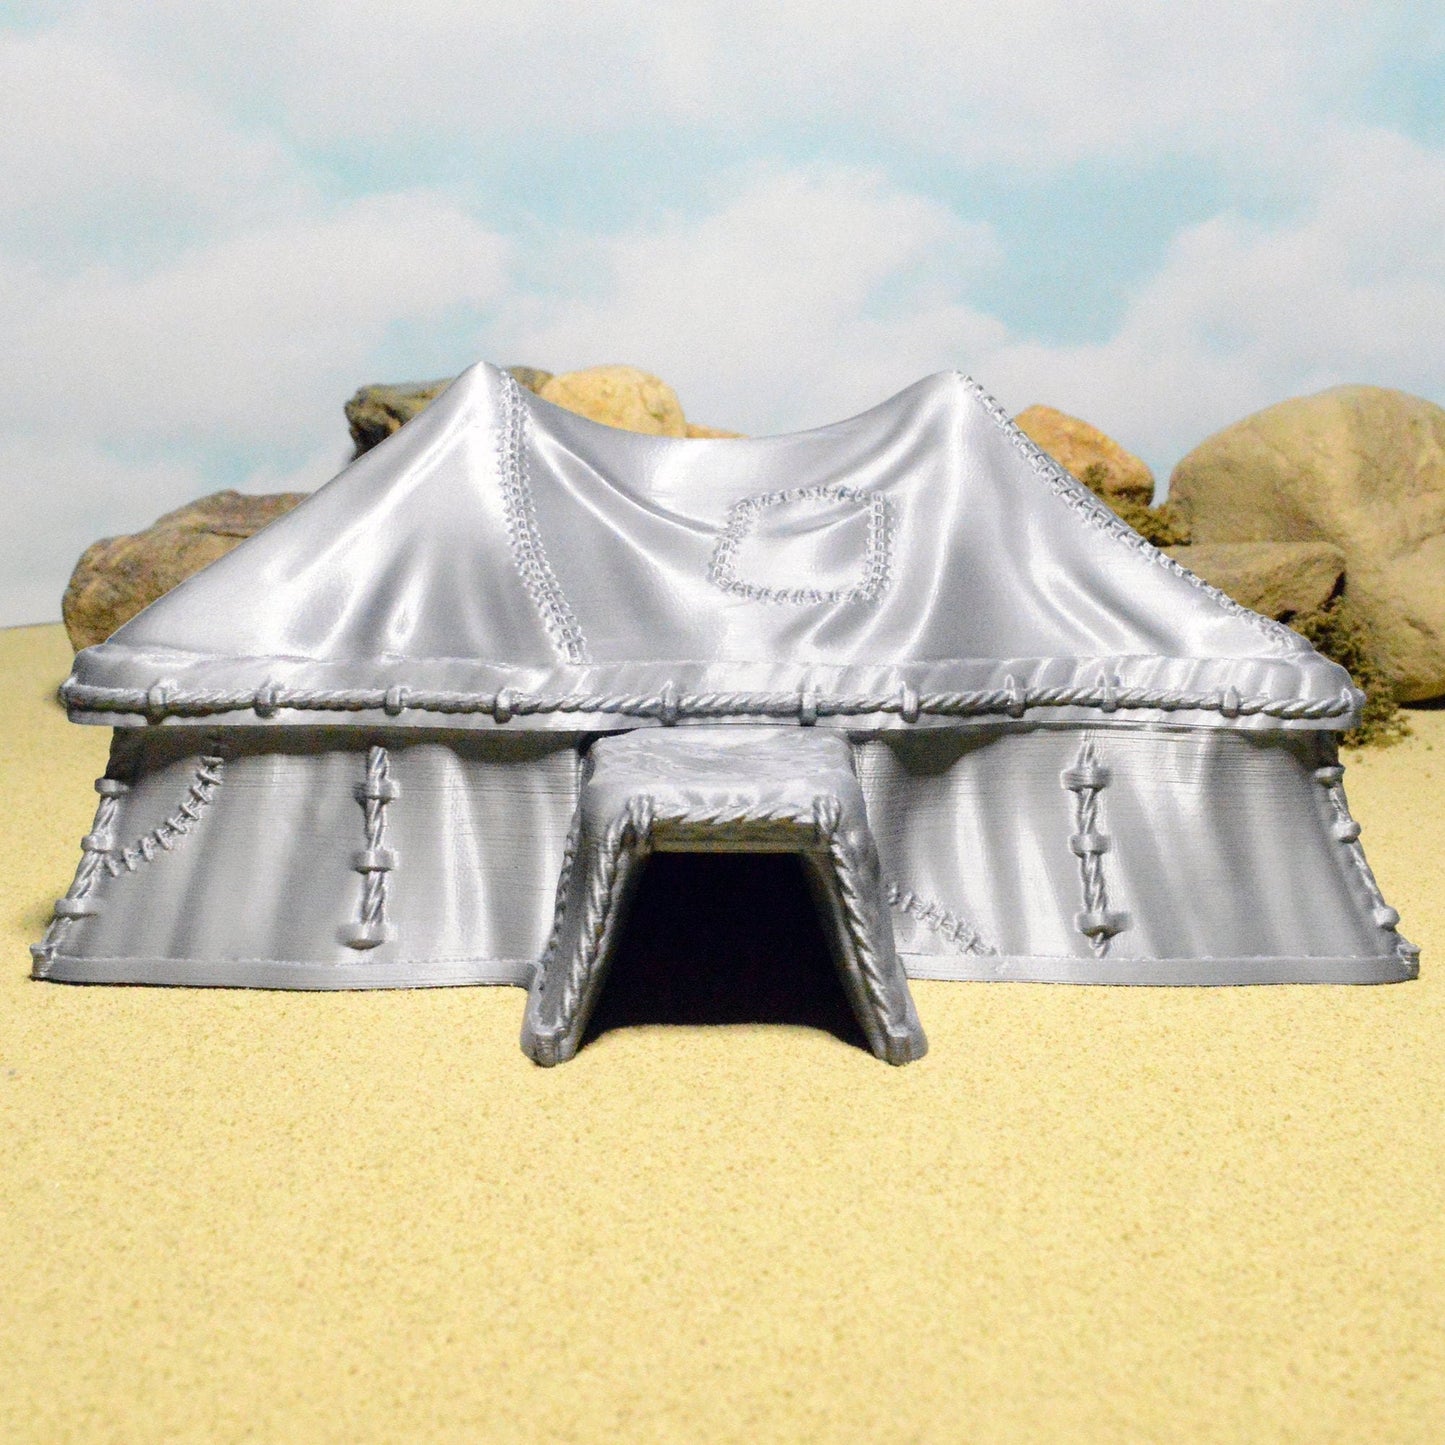 Grand Tent 15mm 28mm for D&D Camp Terrain, DnD Terrain, Pathfinder Terrain, Miniature Tent, Market Tent, Camp Tent, Bazaar Tent